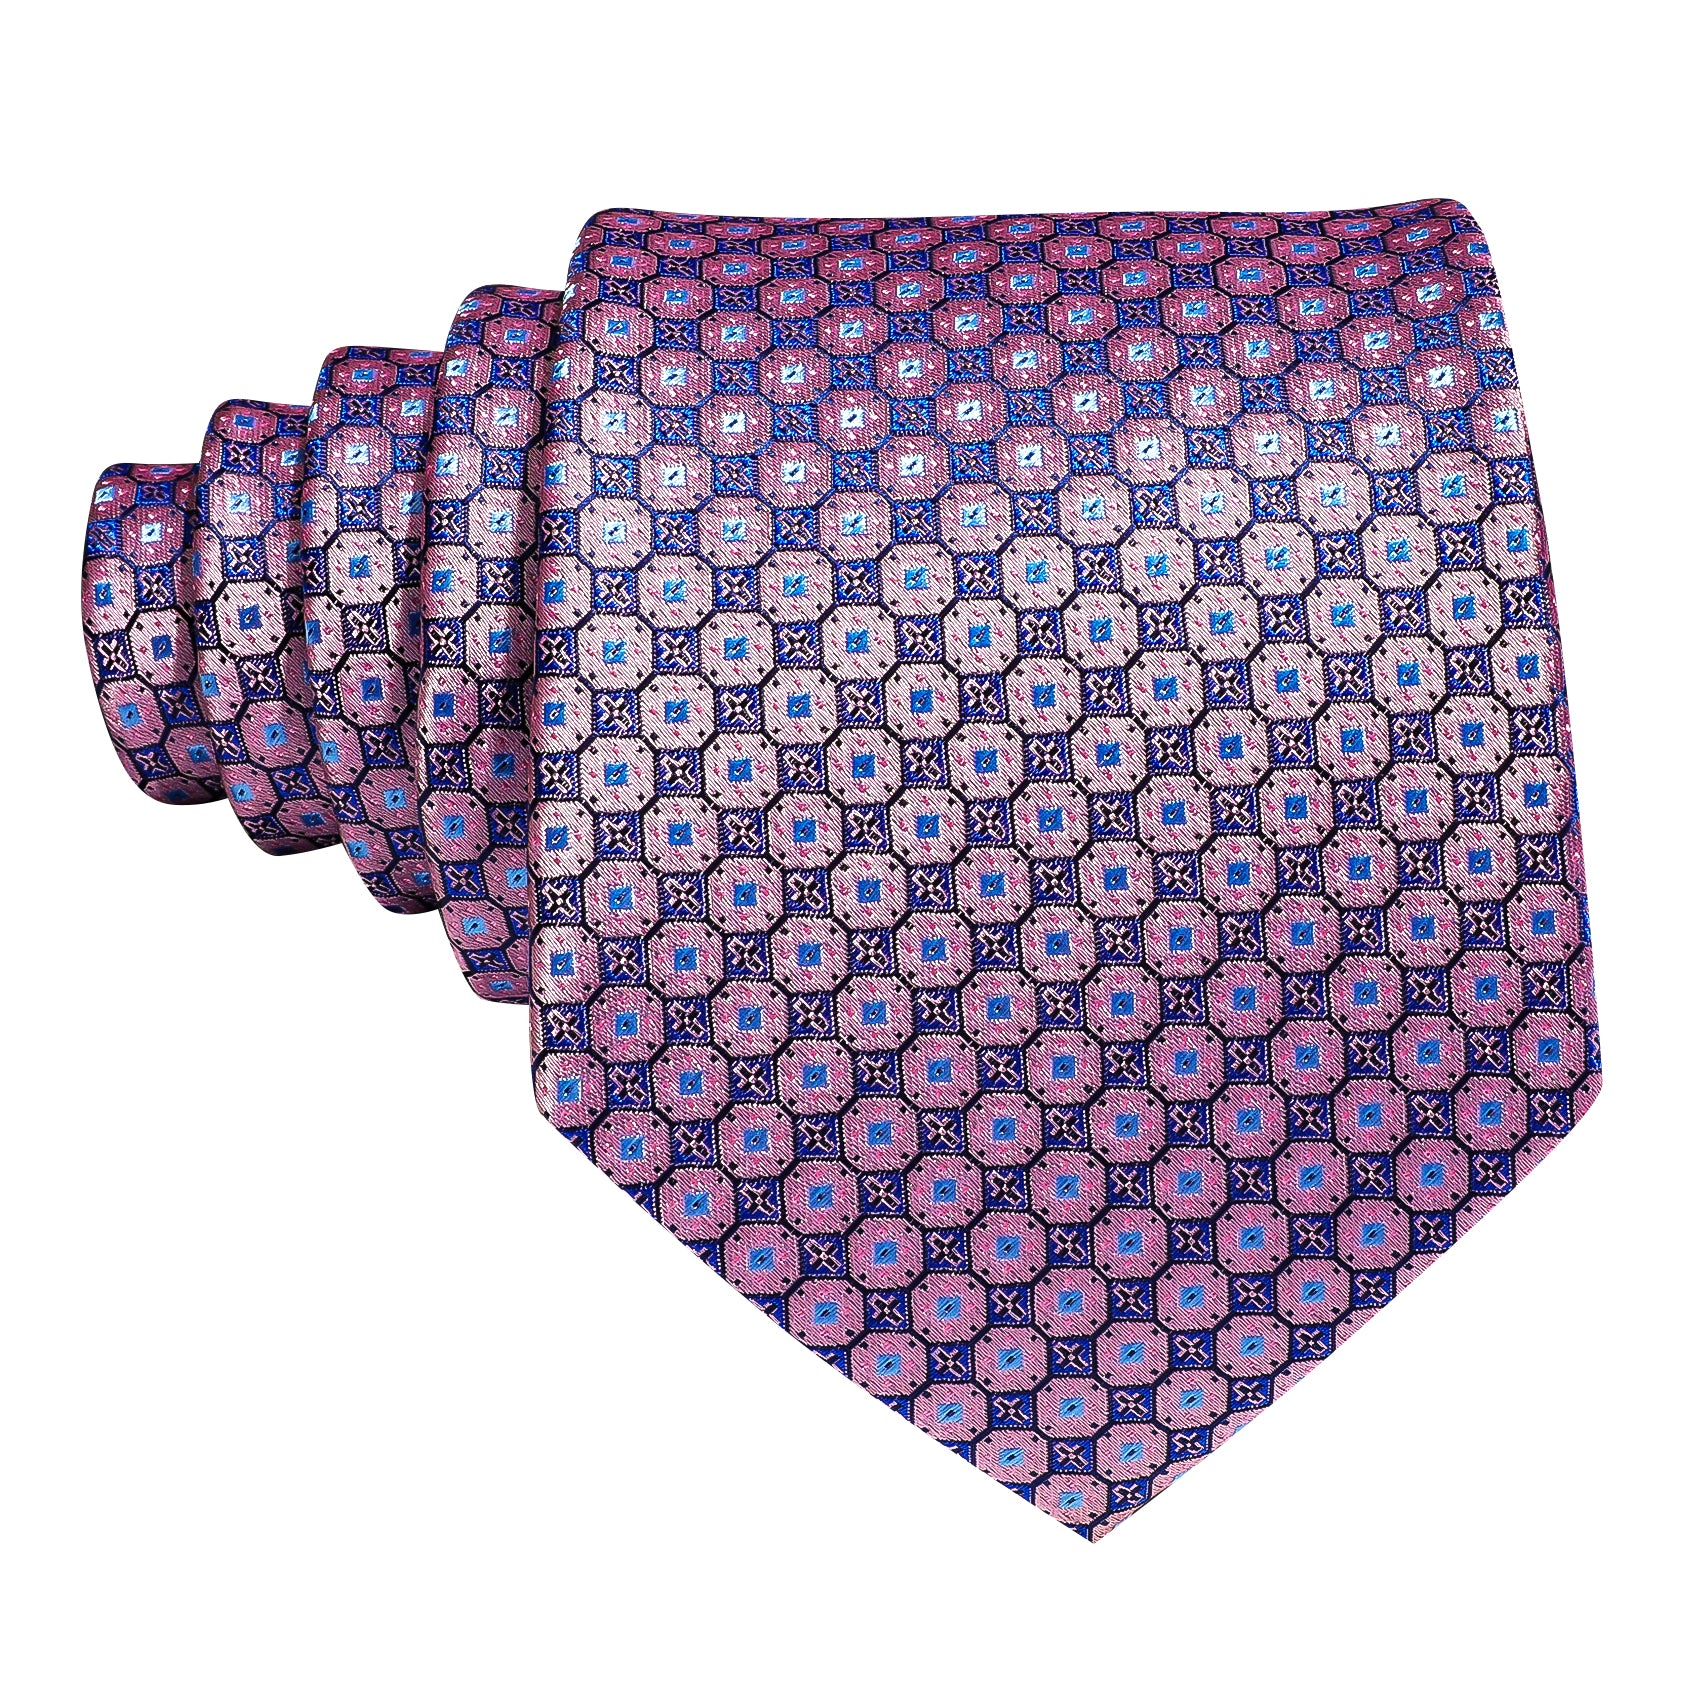 New Pink Blue Plaid Silk Tie Hanky Cufflinks Set